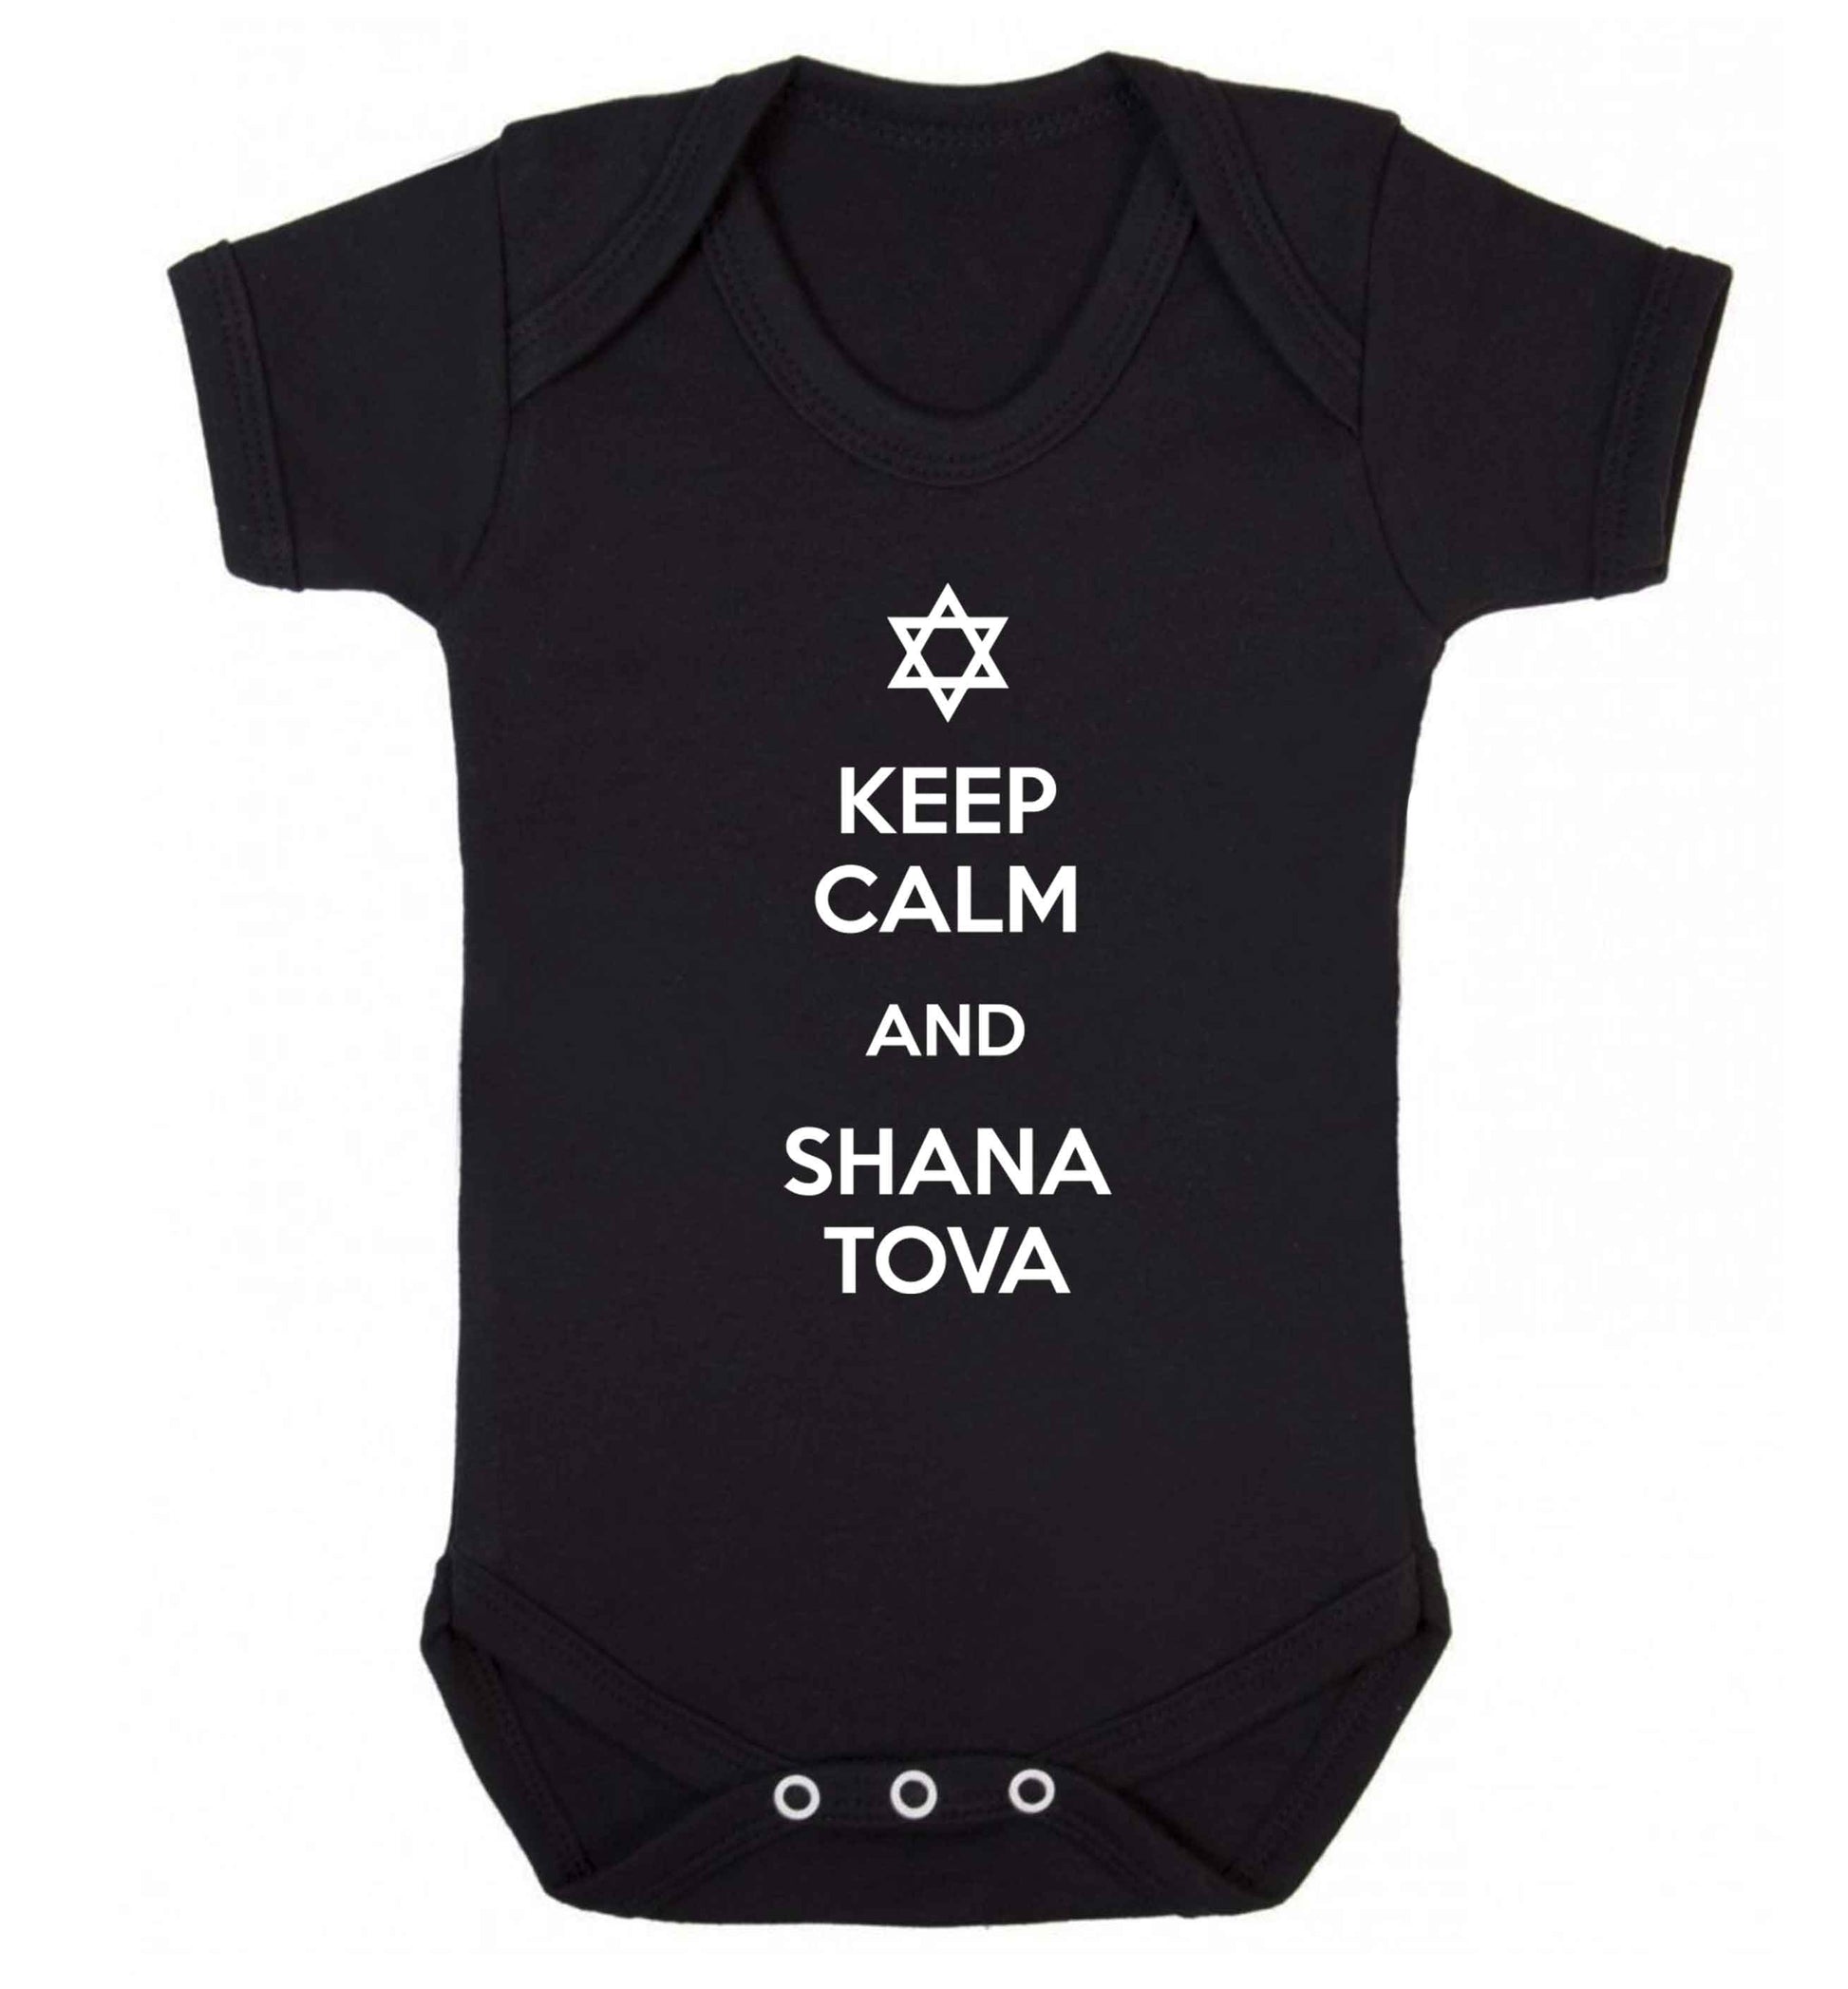 Keep calm and shana tova Baby Vest black 18-24 months